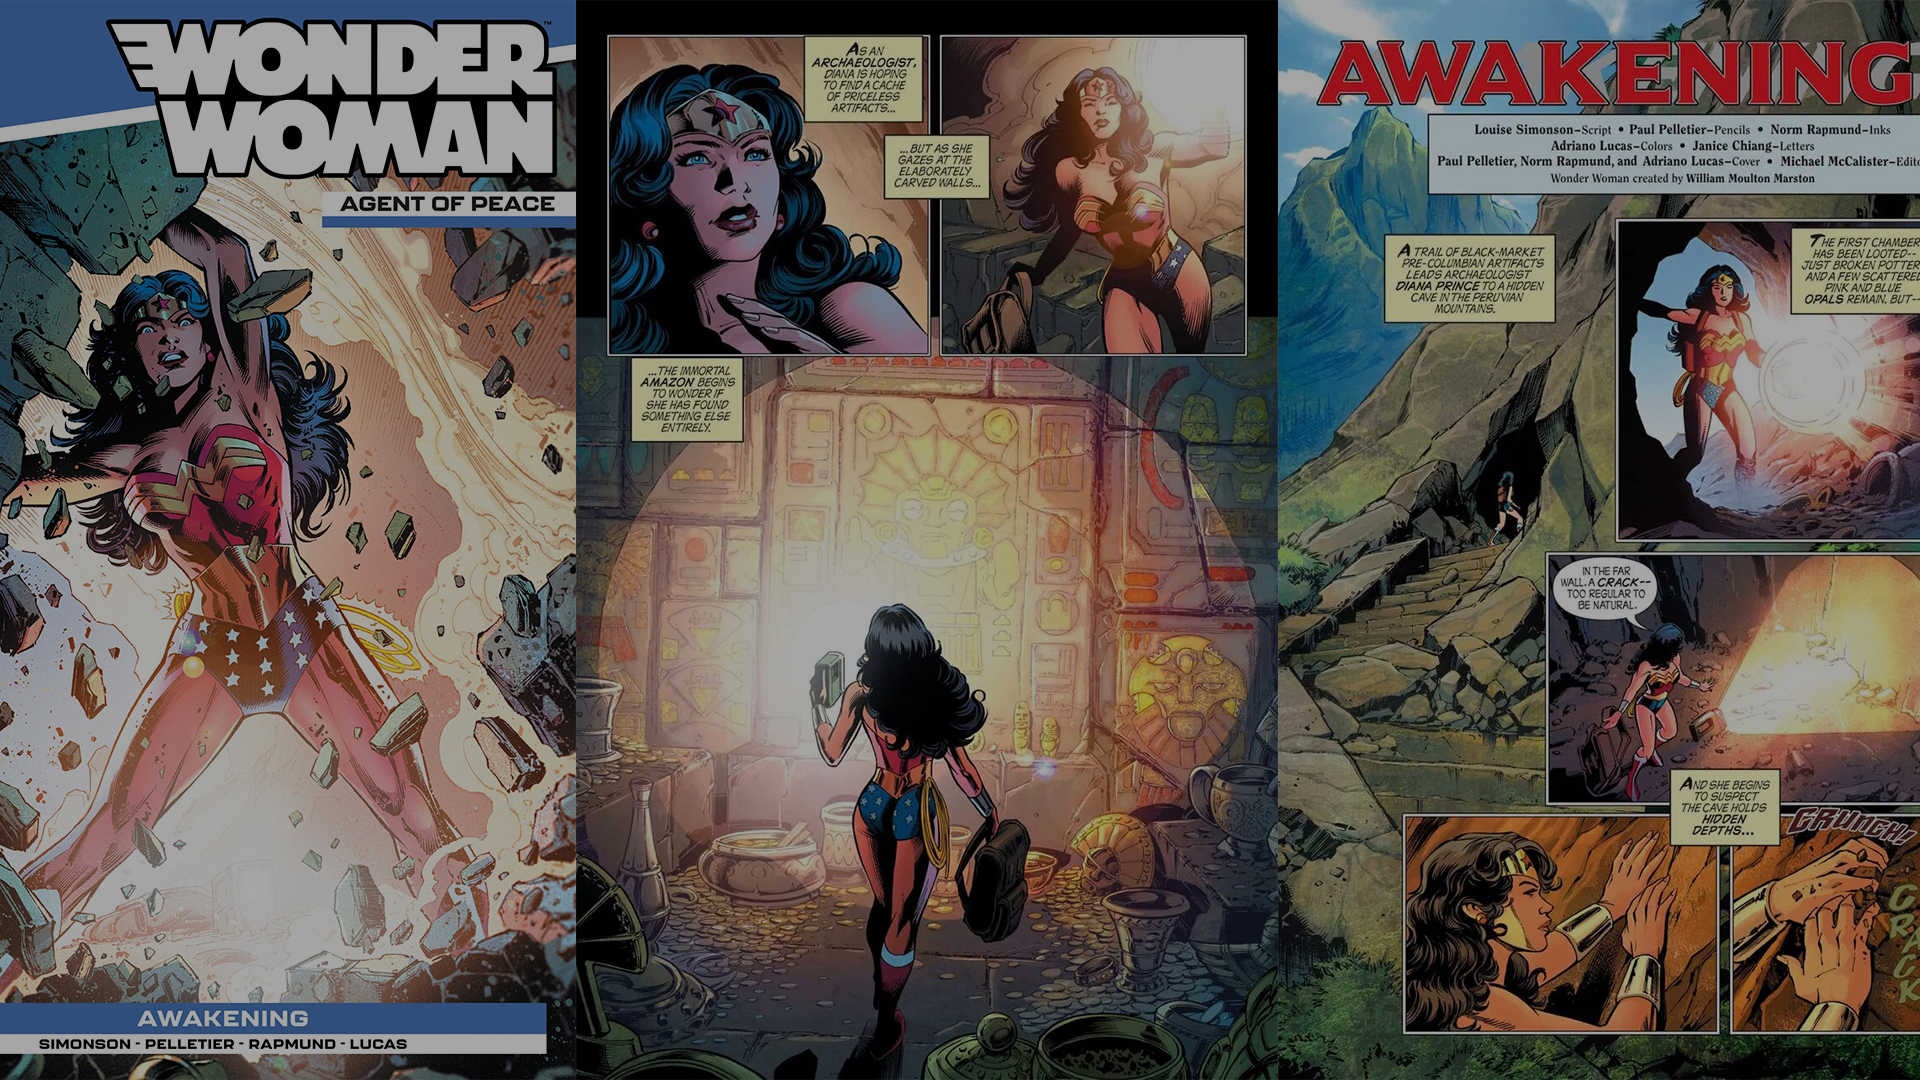 Wonder Woman (Diana Prince), DC Database